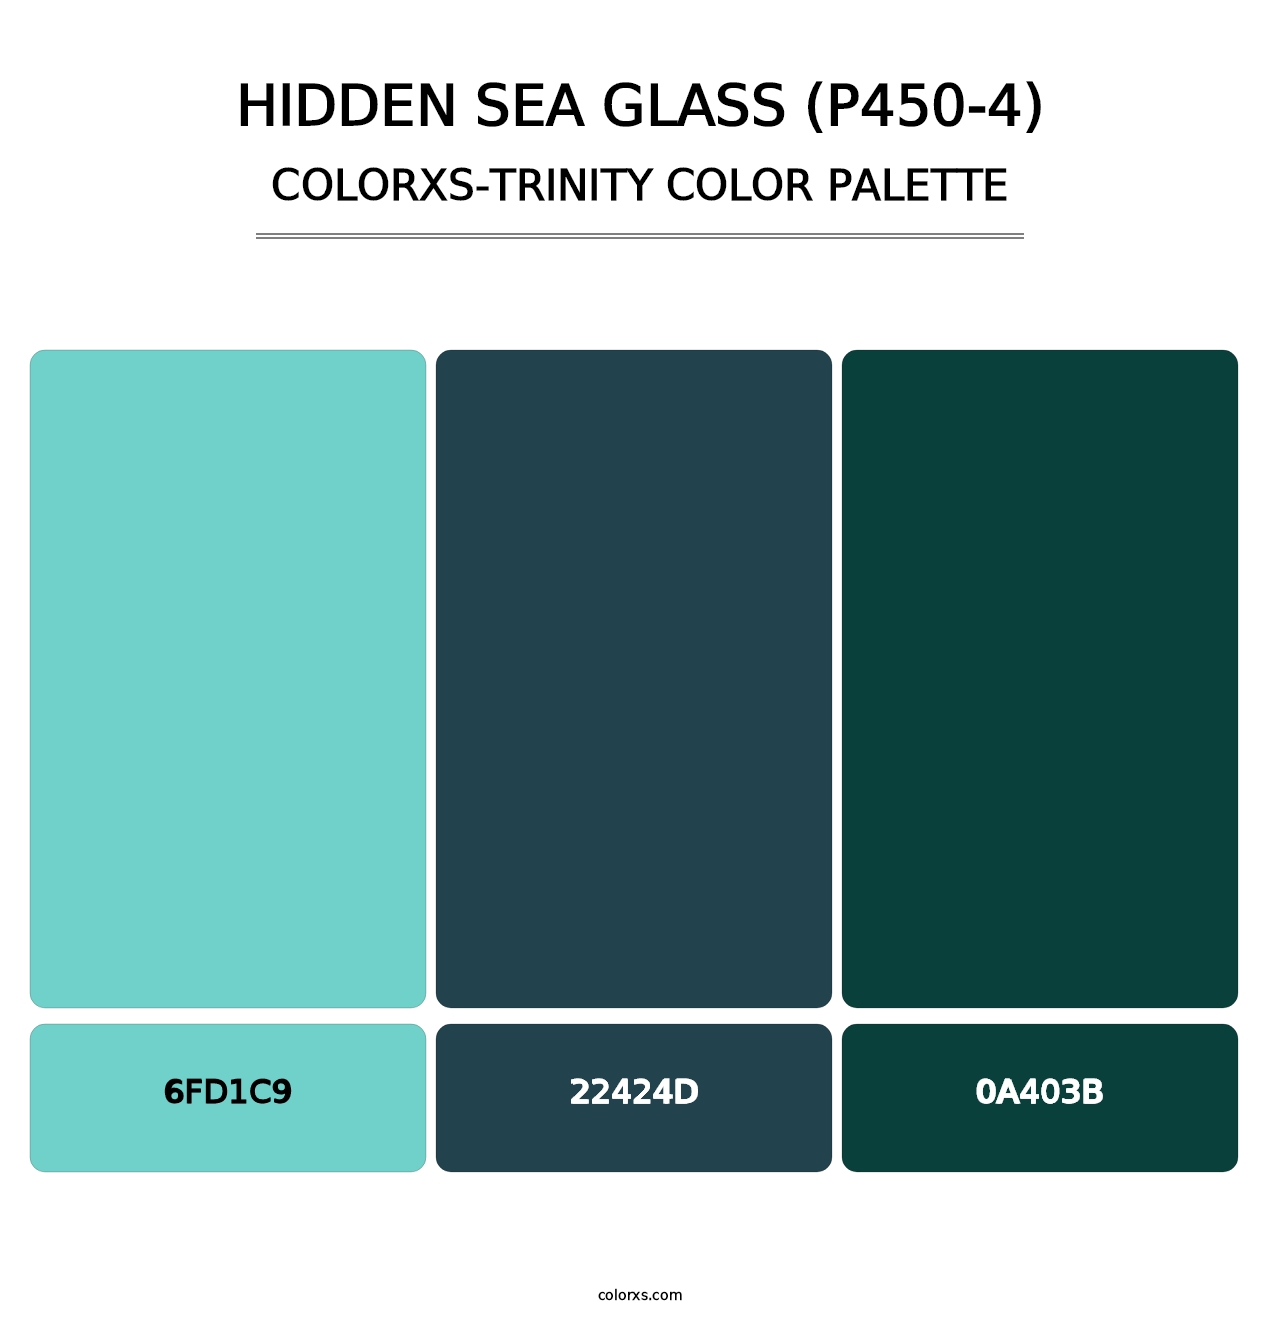 Hidden Sea Glass (P450-4) - Colorxs Trinity Palette